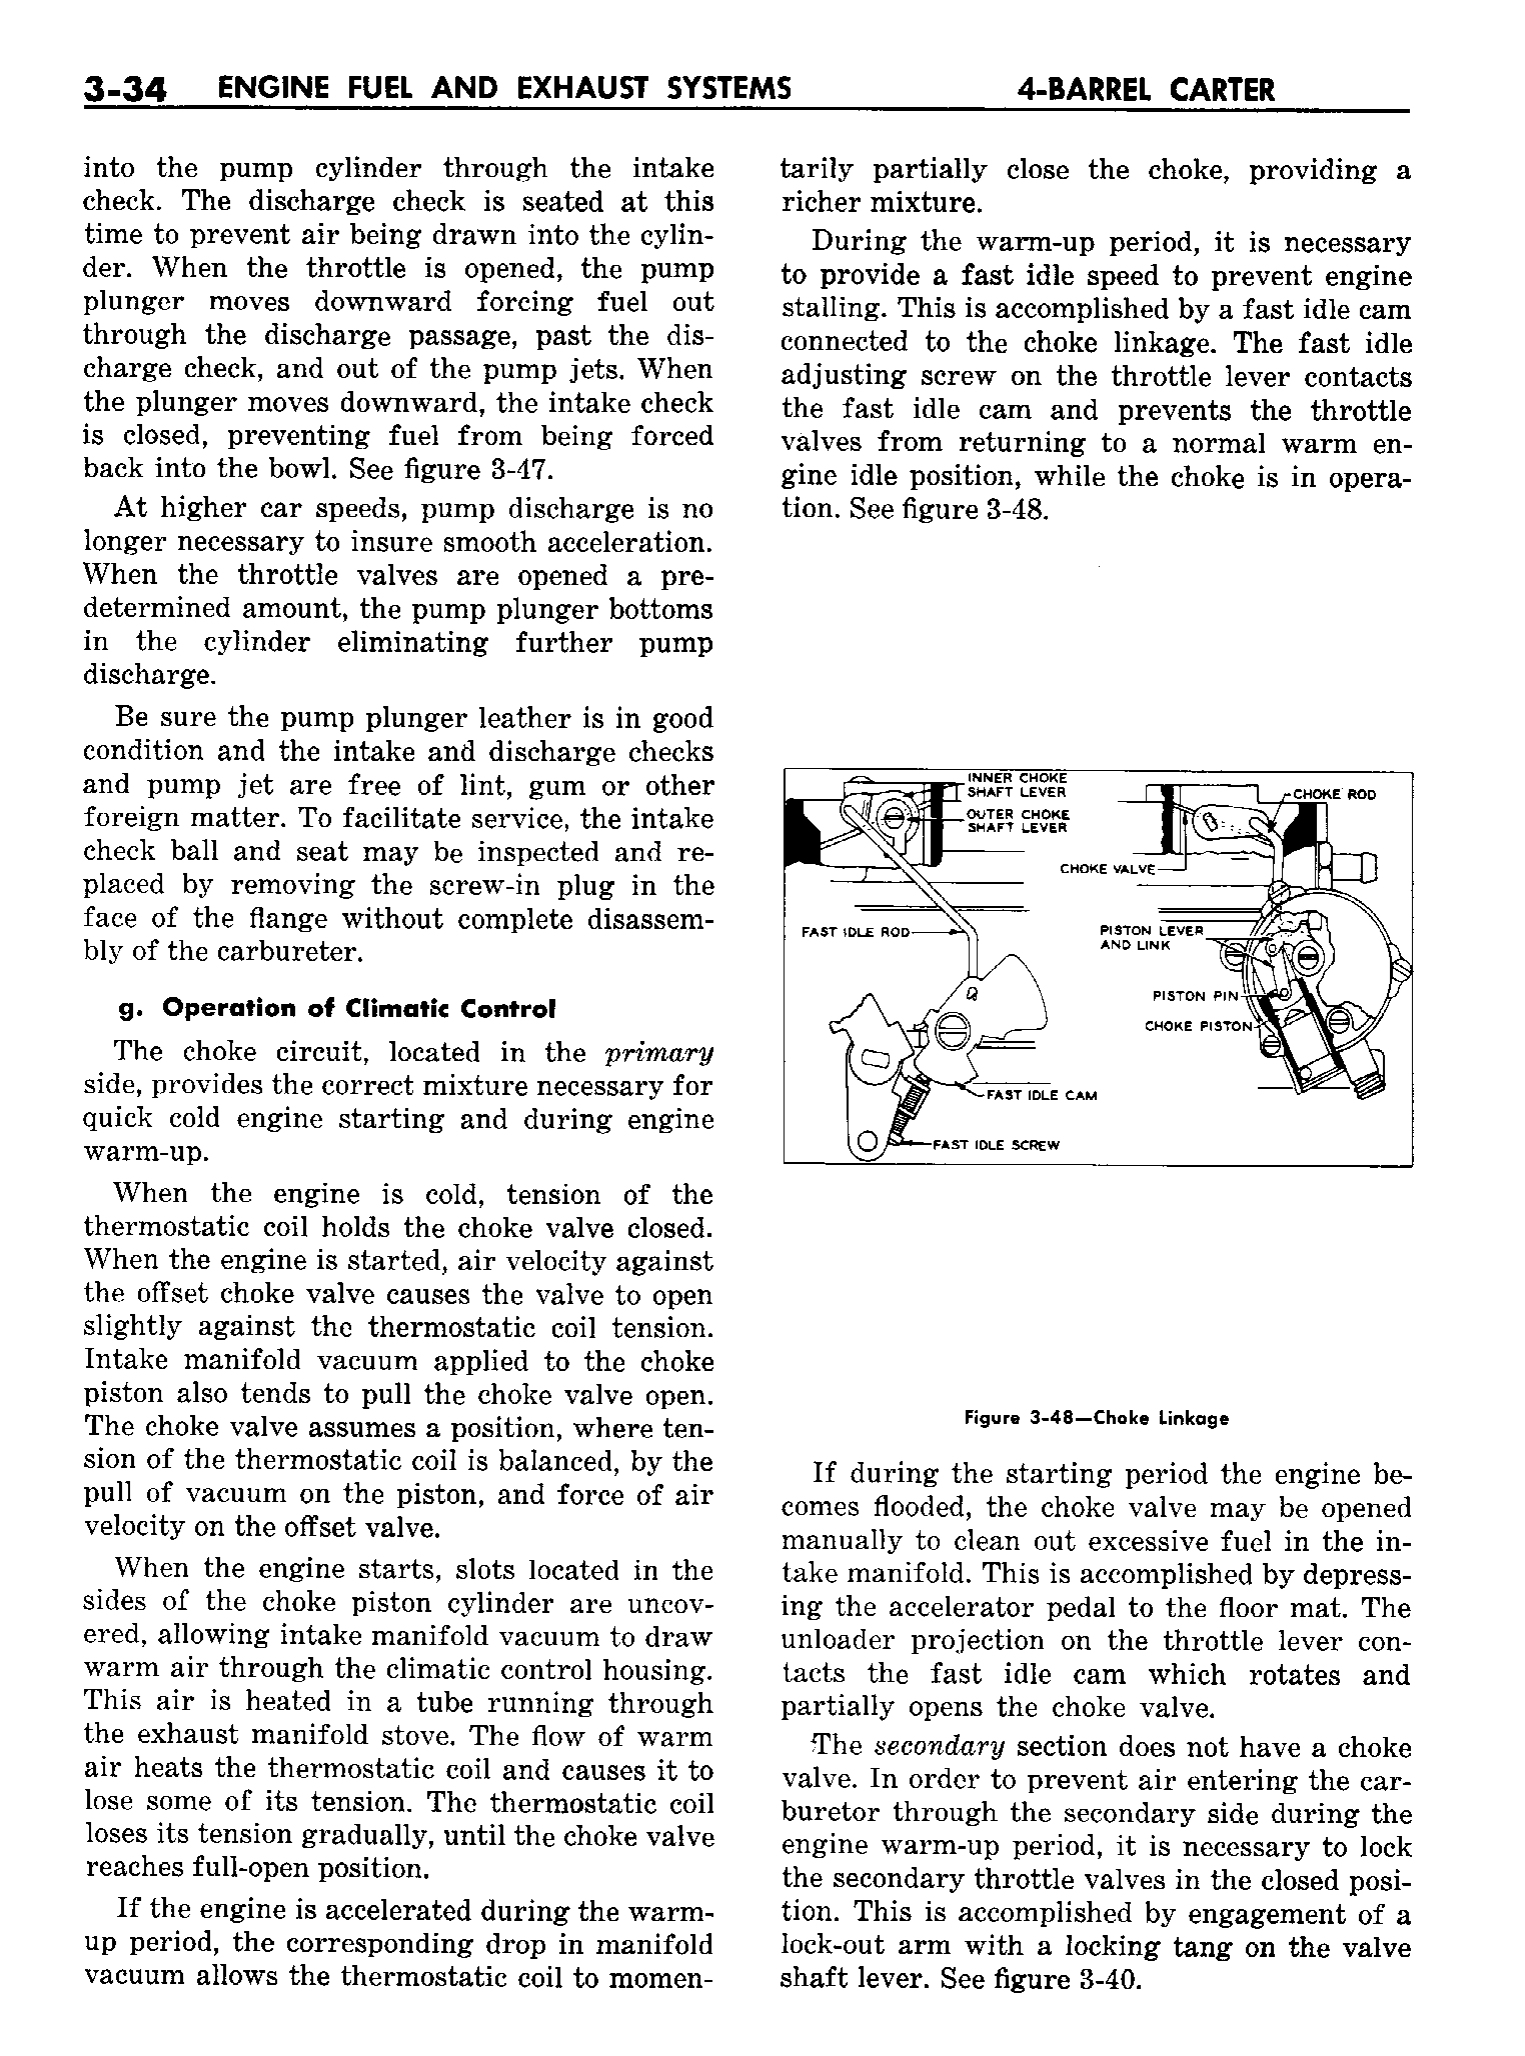 n_04 1958 Buick Shop Manual - Engine Fuel & Exhaust_34.jpg